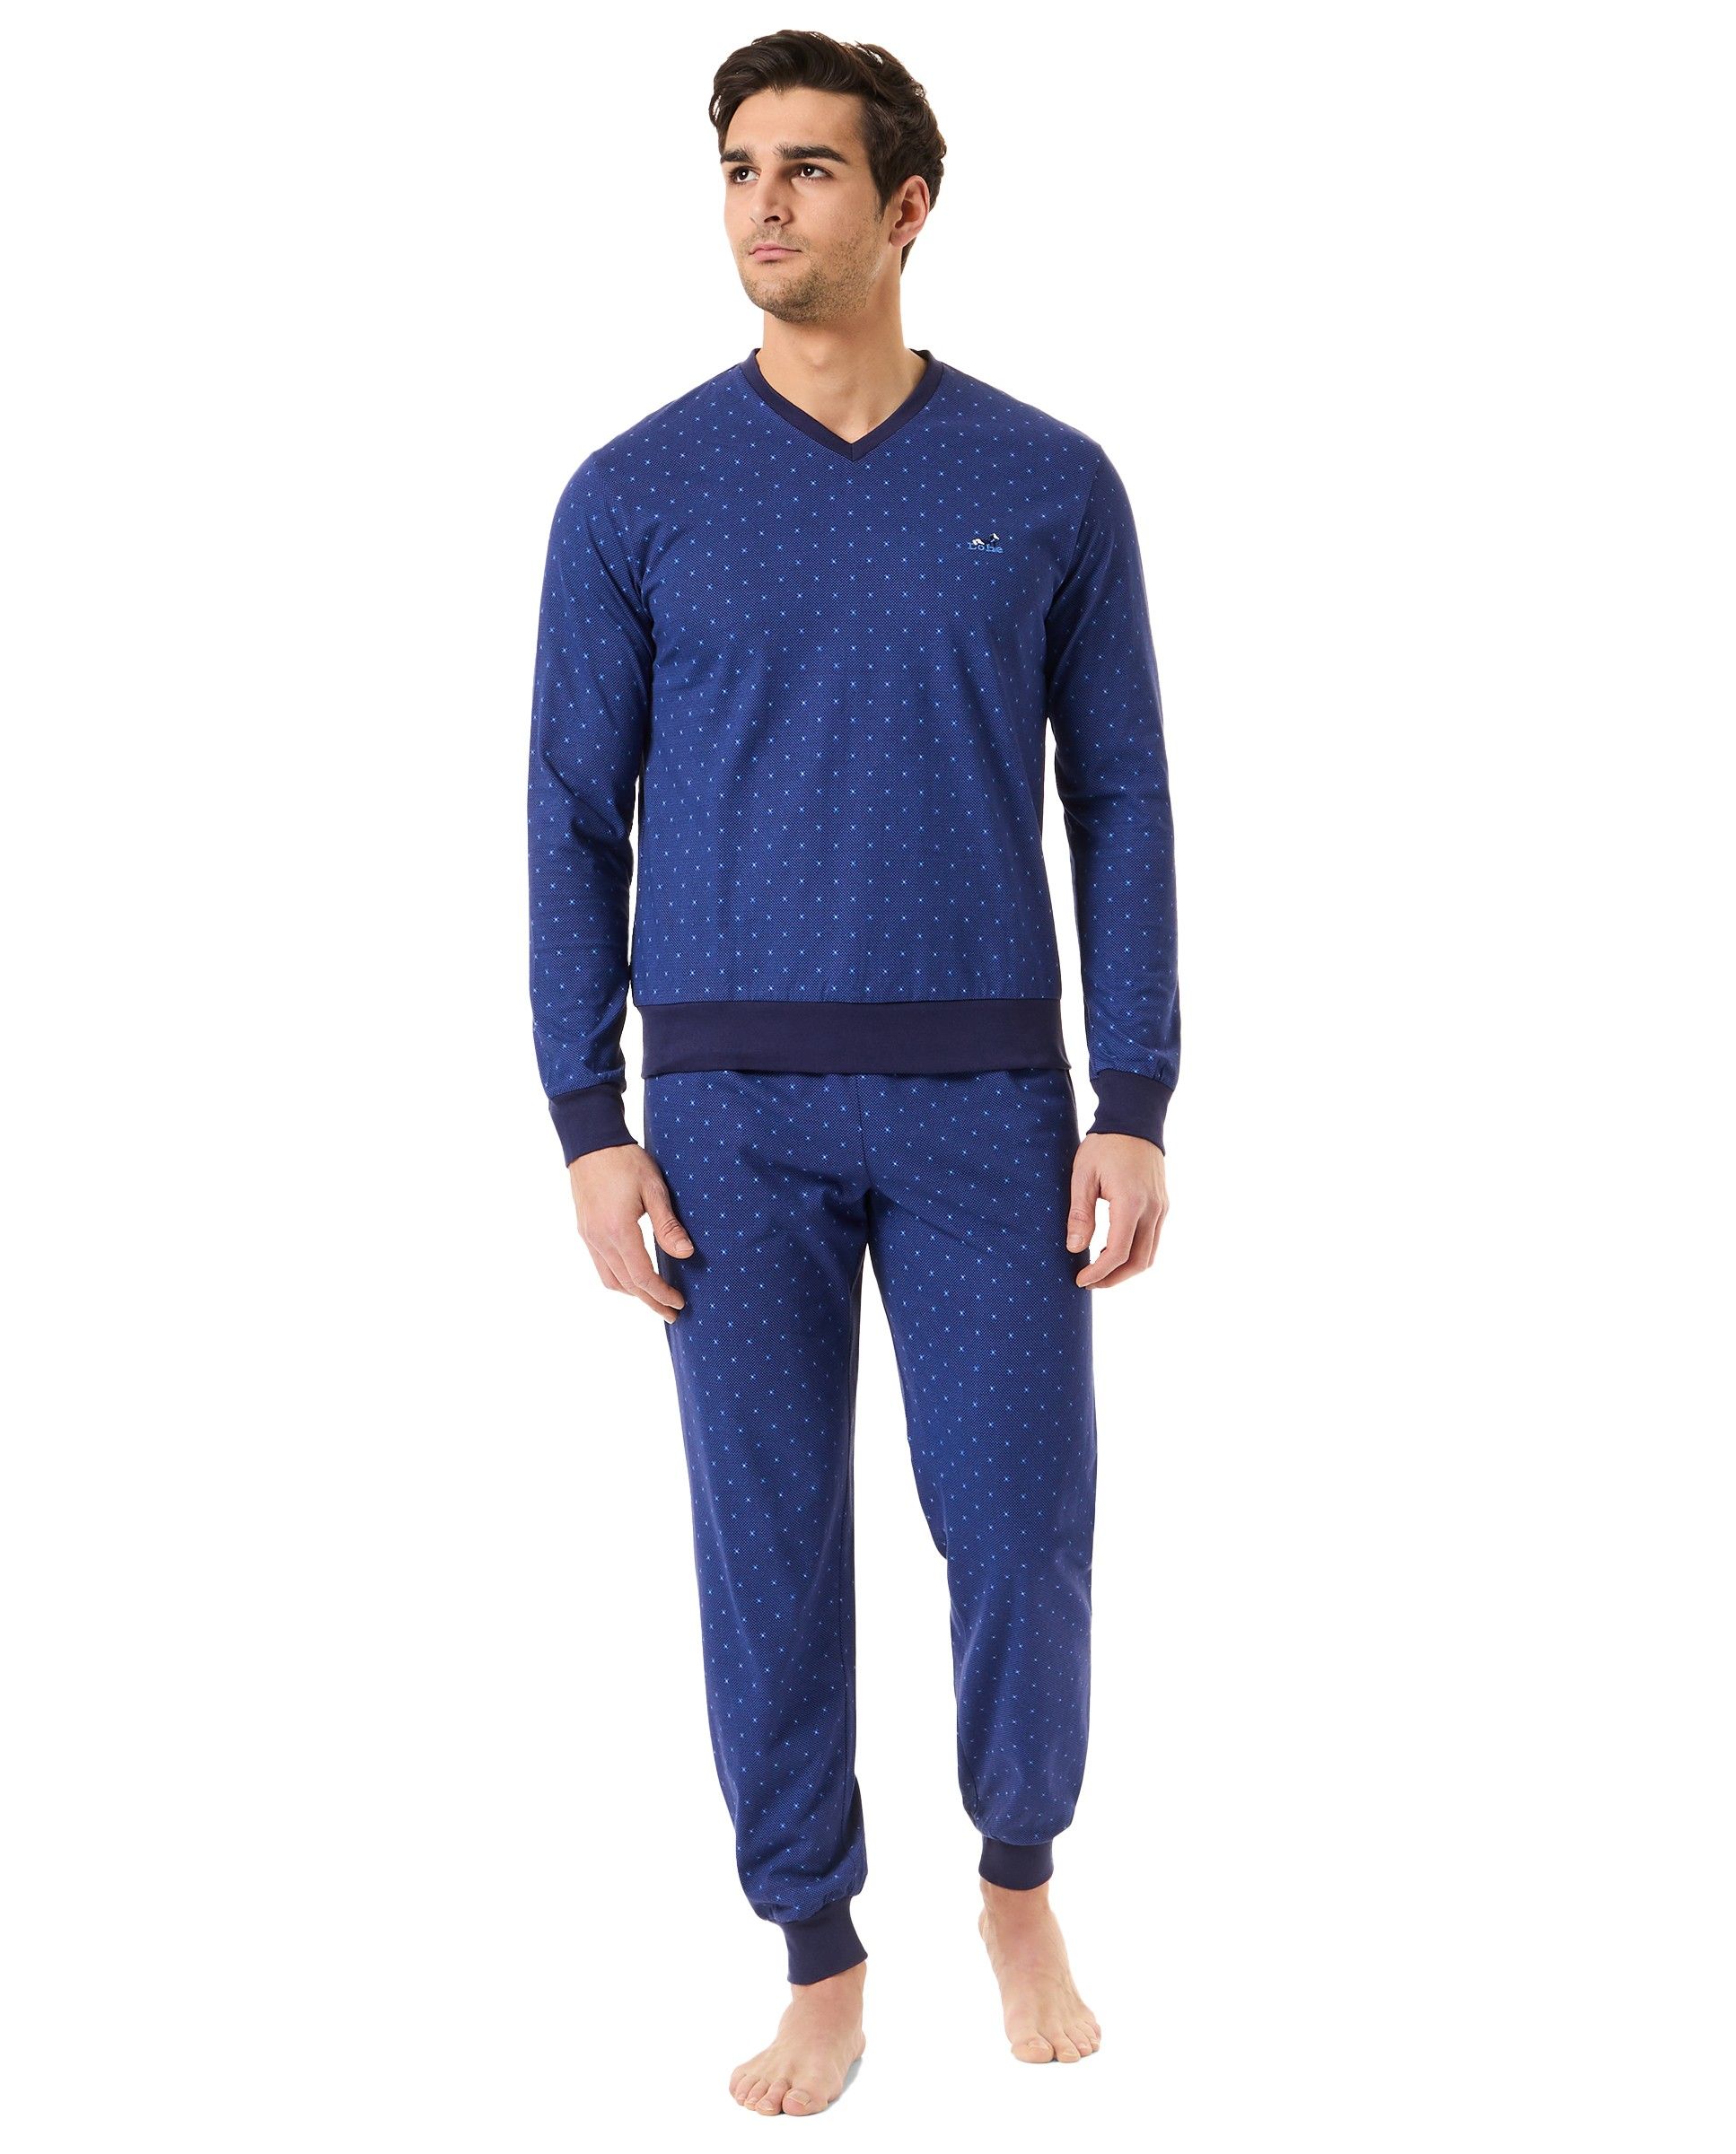 Men's long-sleeved knitted tie-dye pyjamas blue